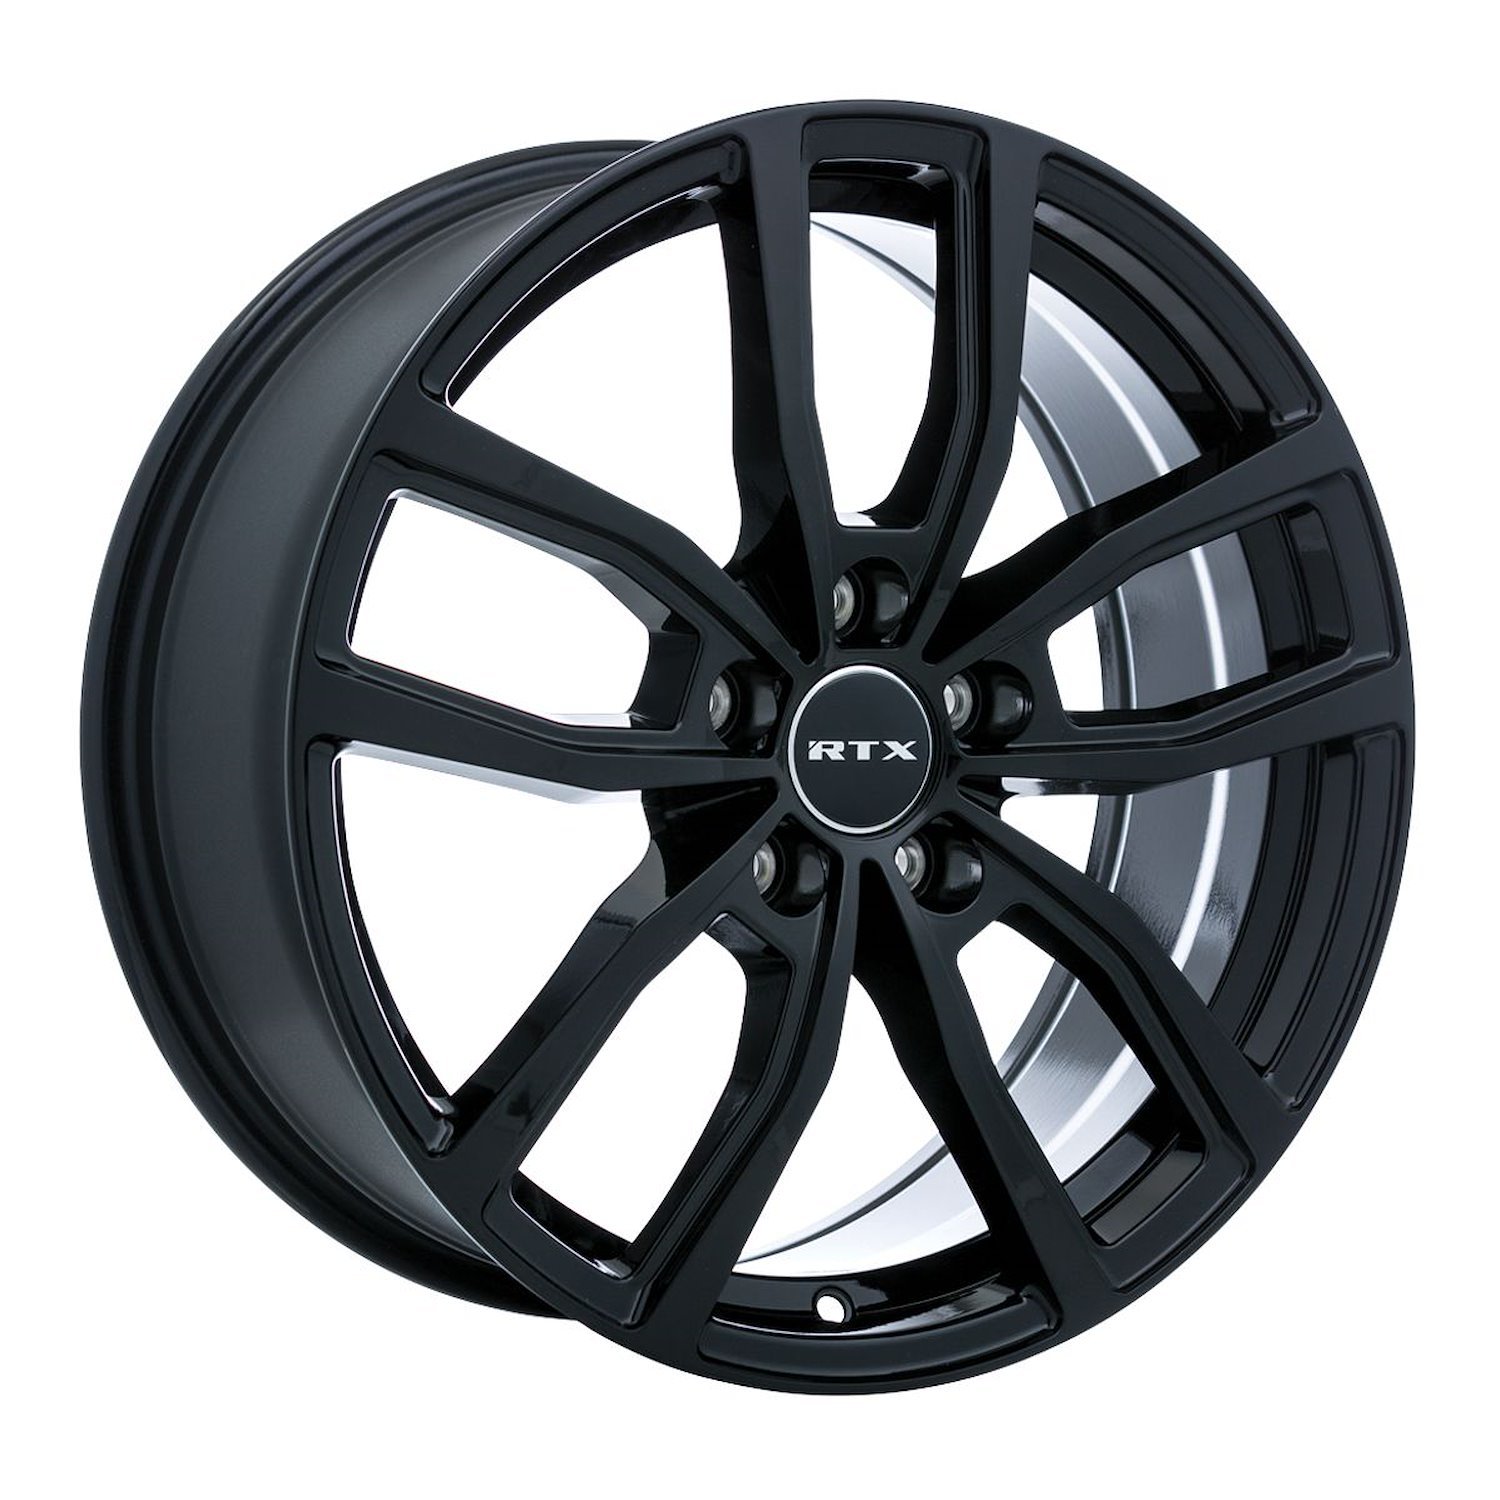 163710 RTX-Series Solstice Wheel [Size: 18" x 7.50"] Gloss Black Finish